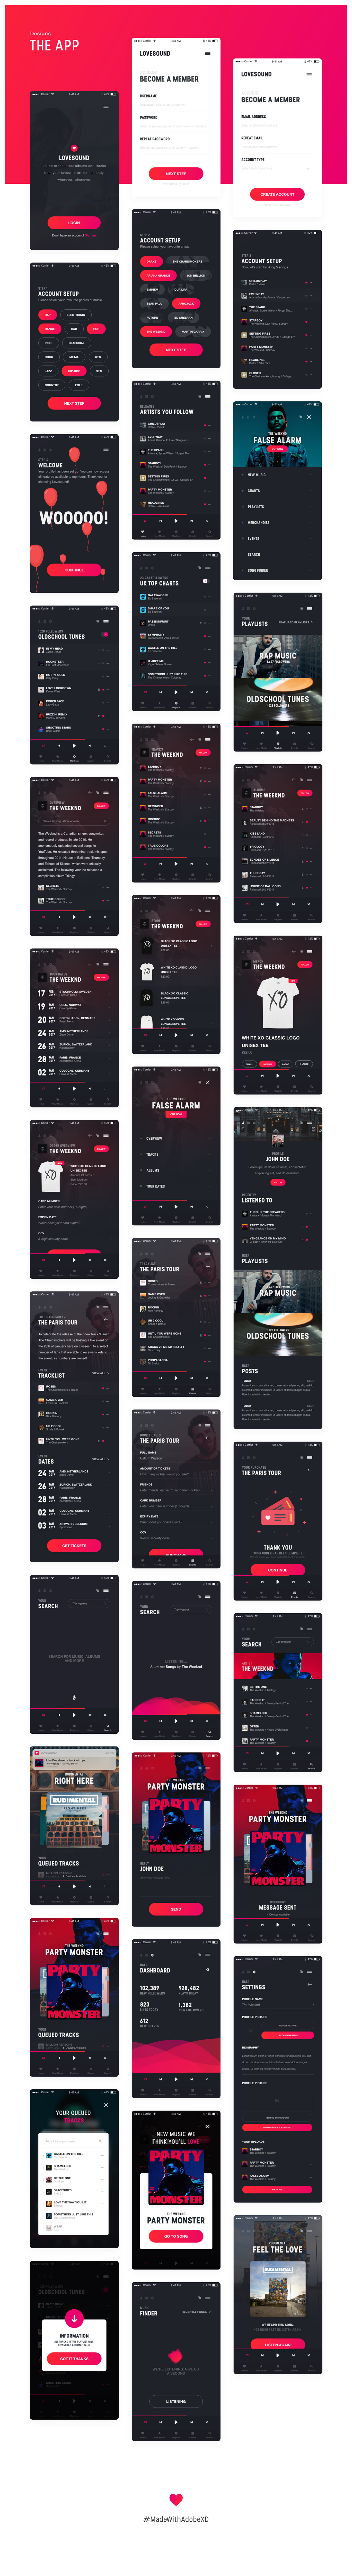 MadeWithAdobeXd music app UI ux University Project iphone